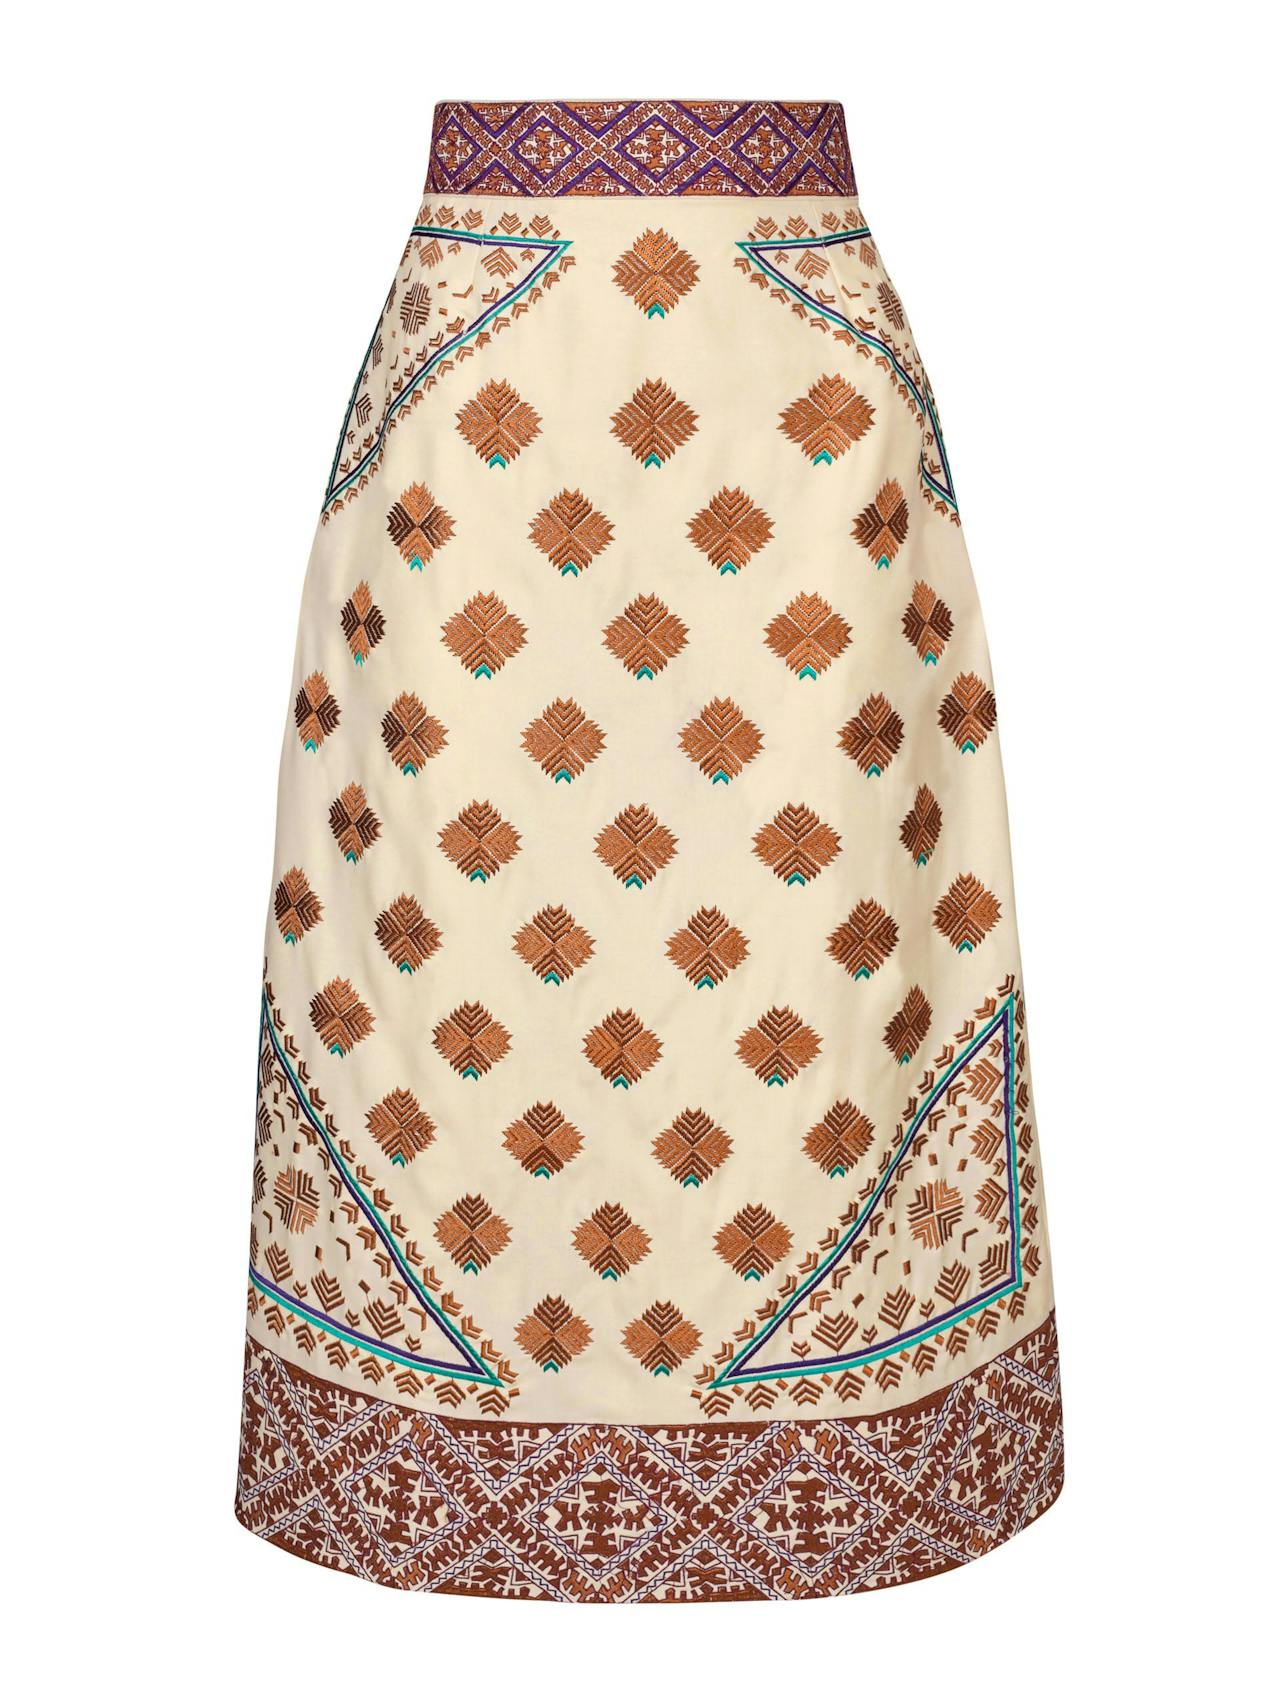 White wool Phulkaari embroidered skirt